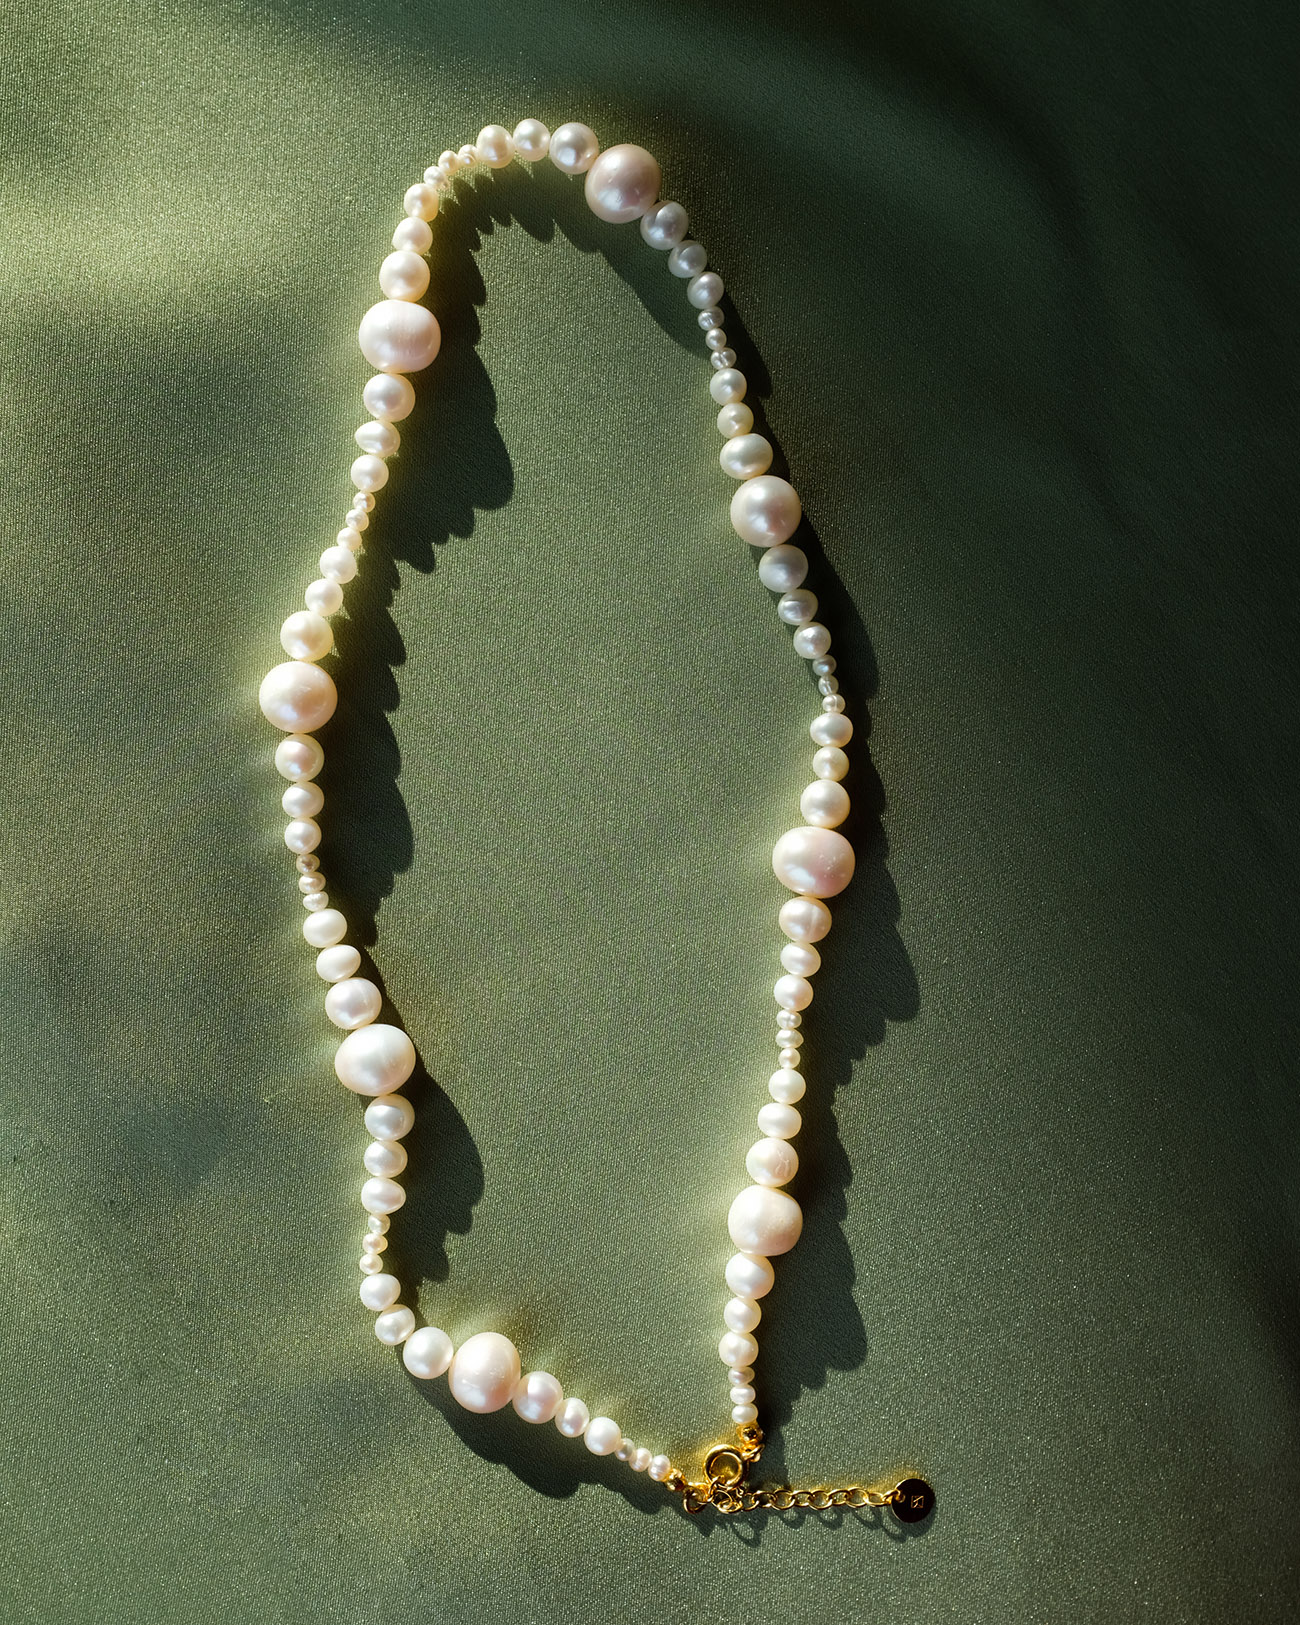 metaformi_design_jewelry_bubbles_pearl_necklace_lifestyle_9